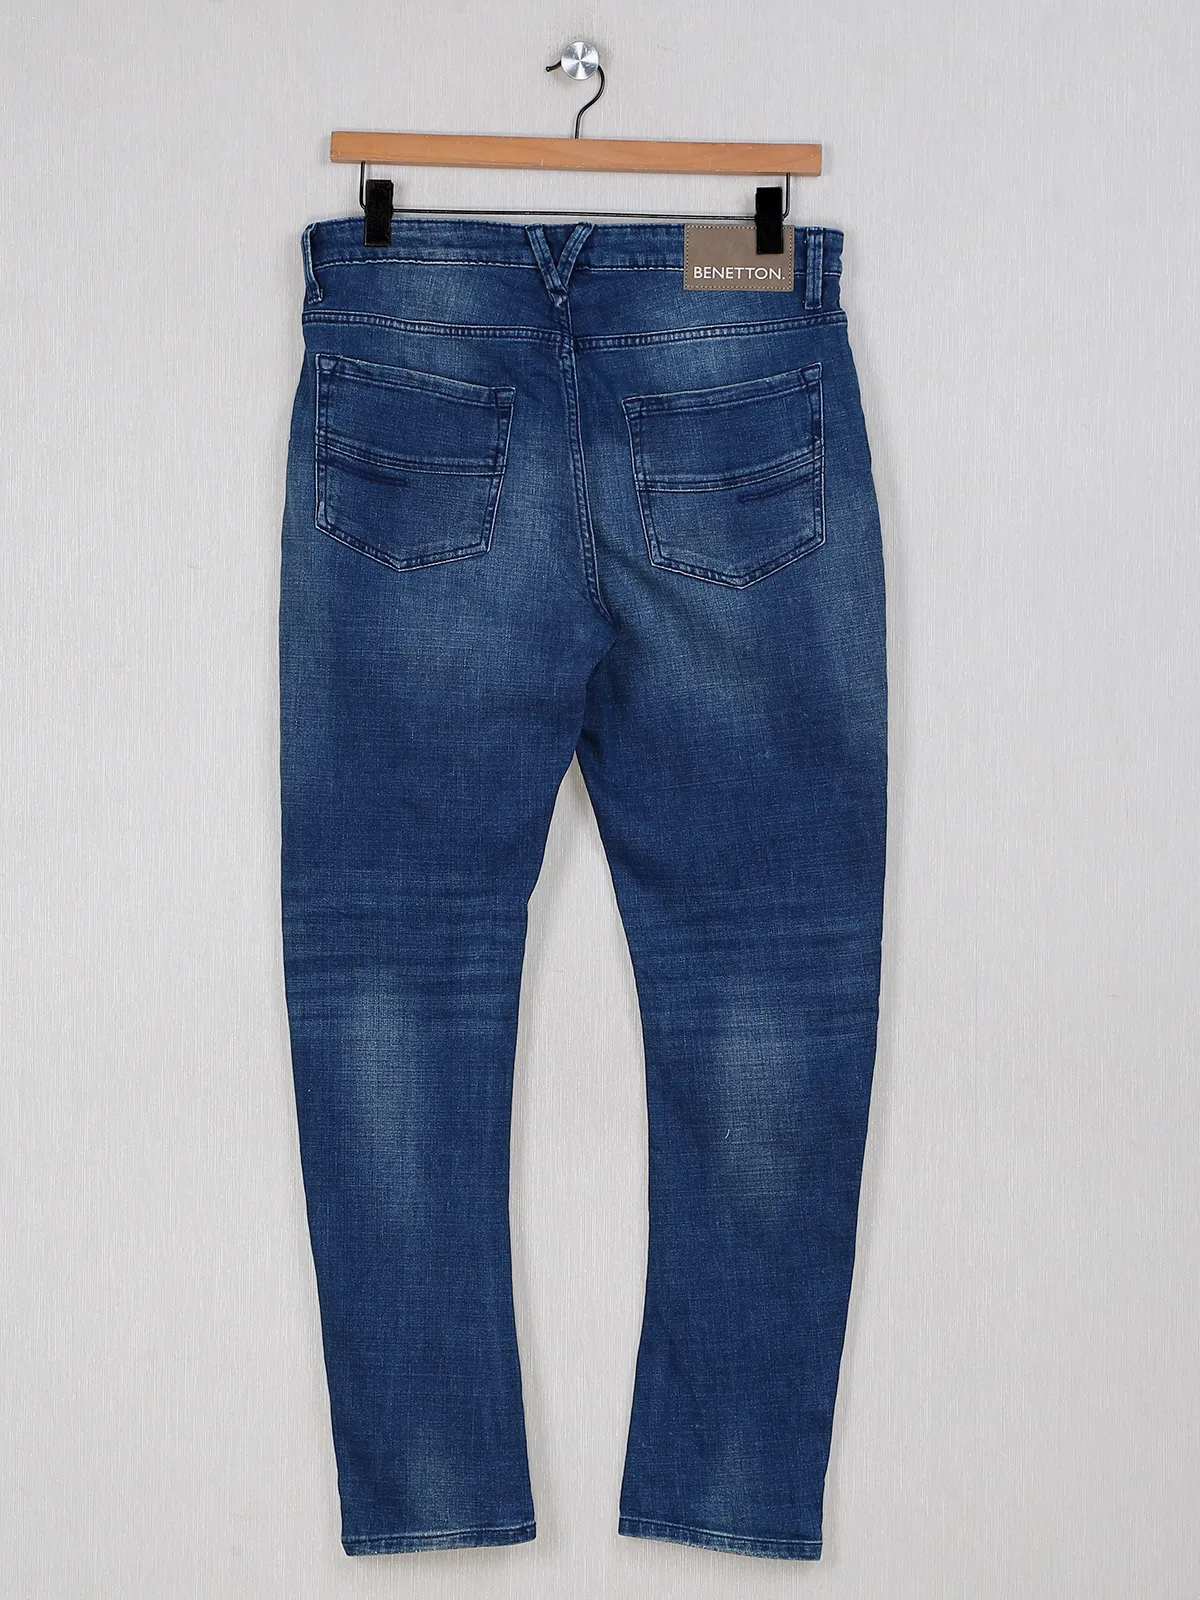 UCB blue denim jeans